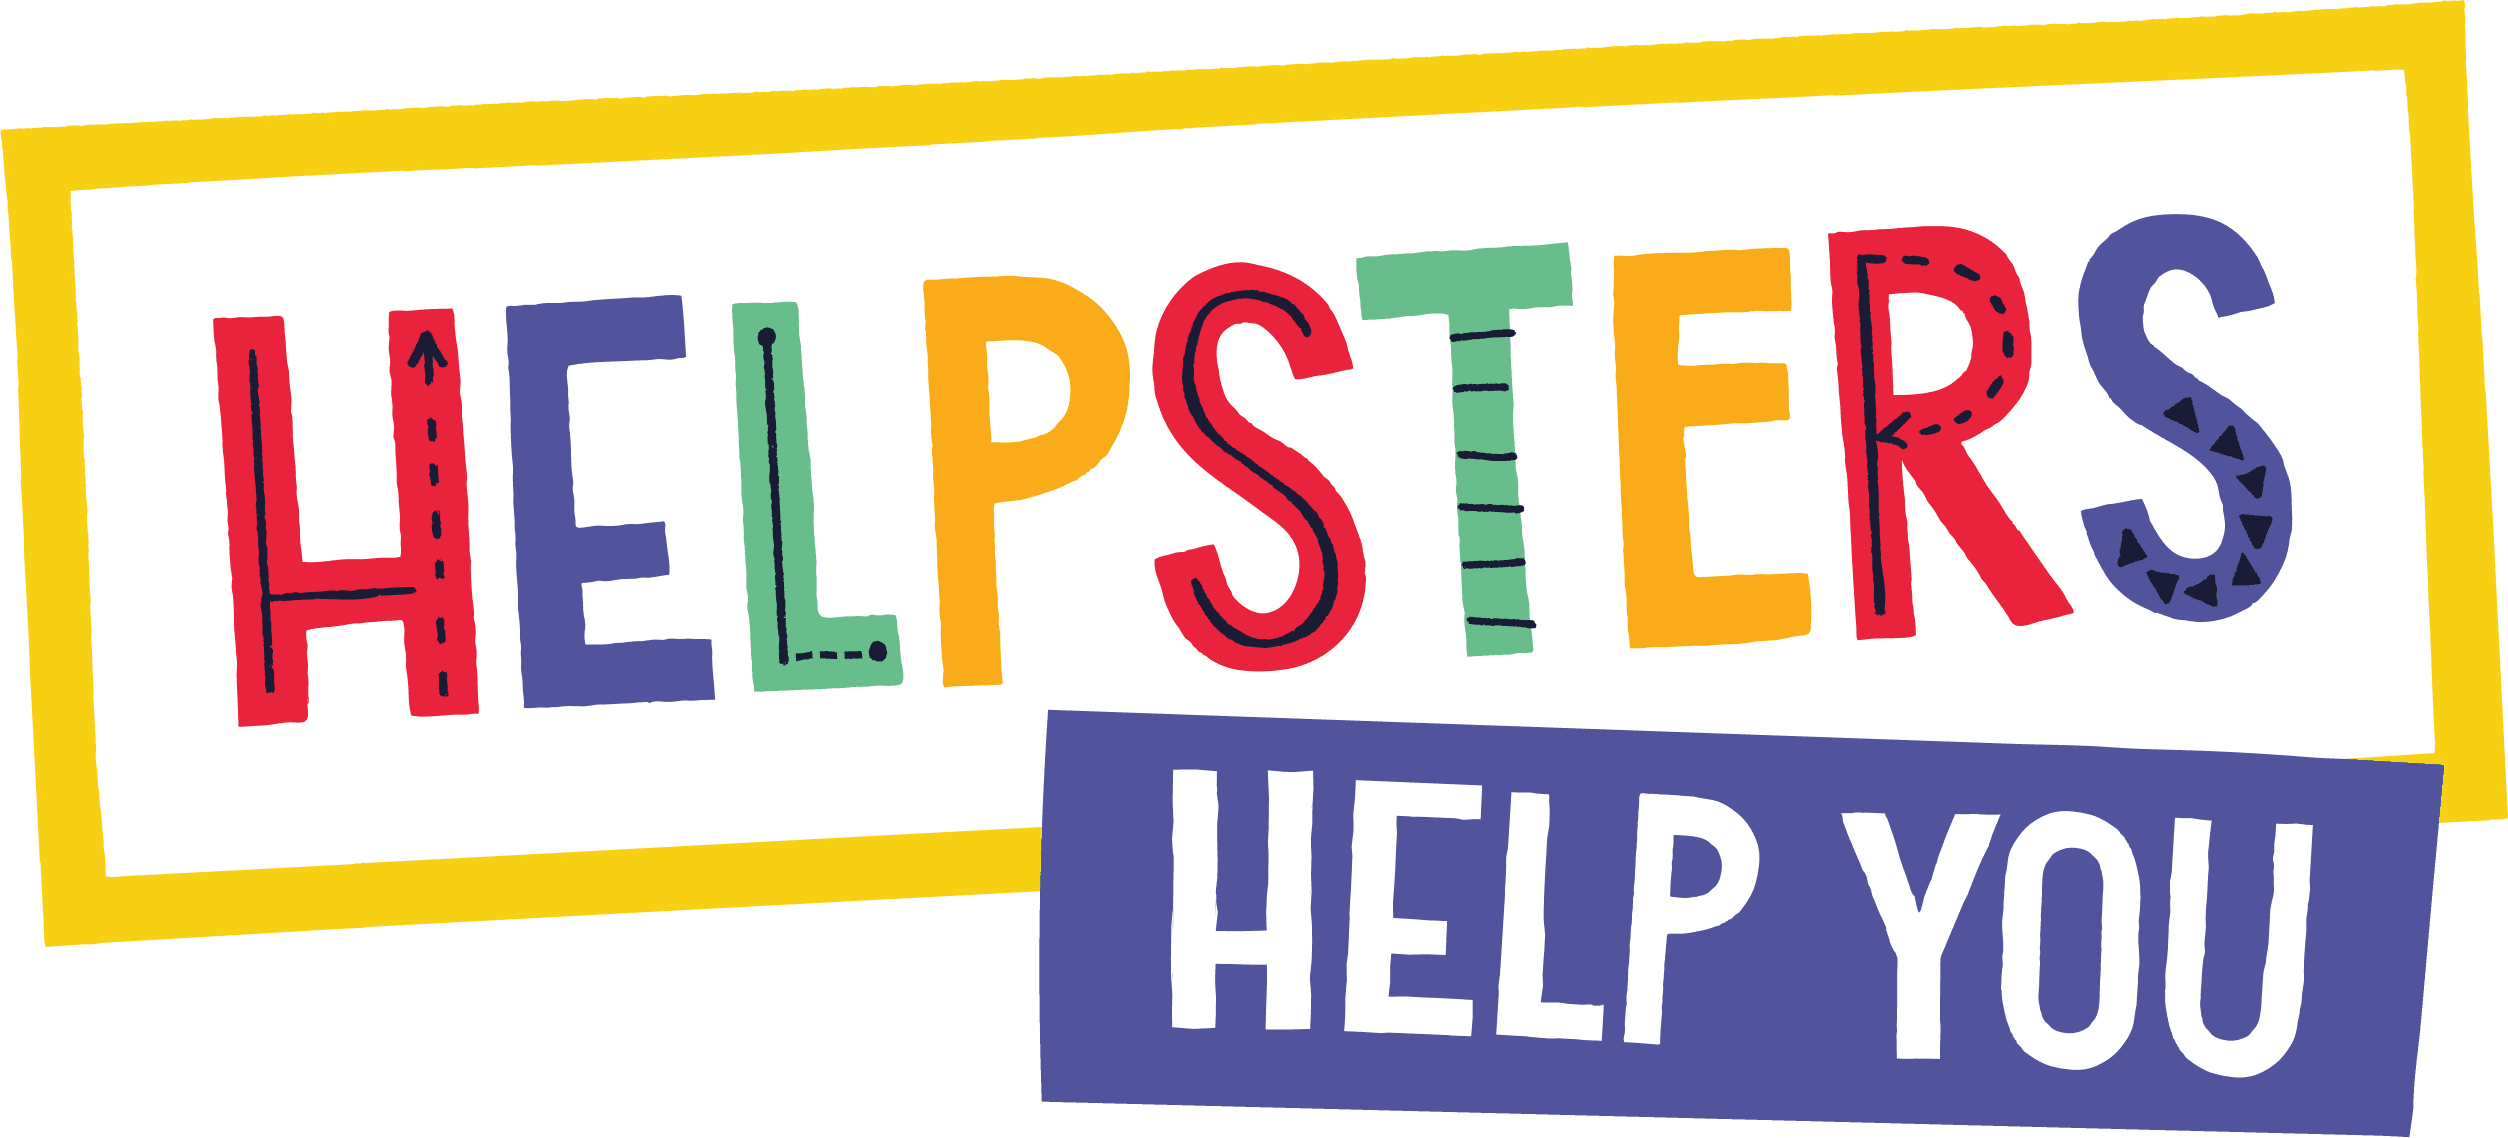 Helpsters Help You logo